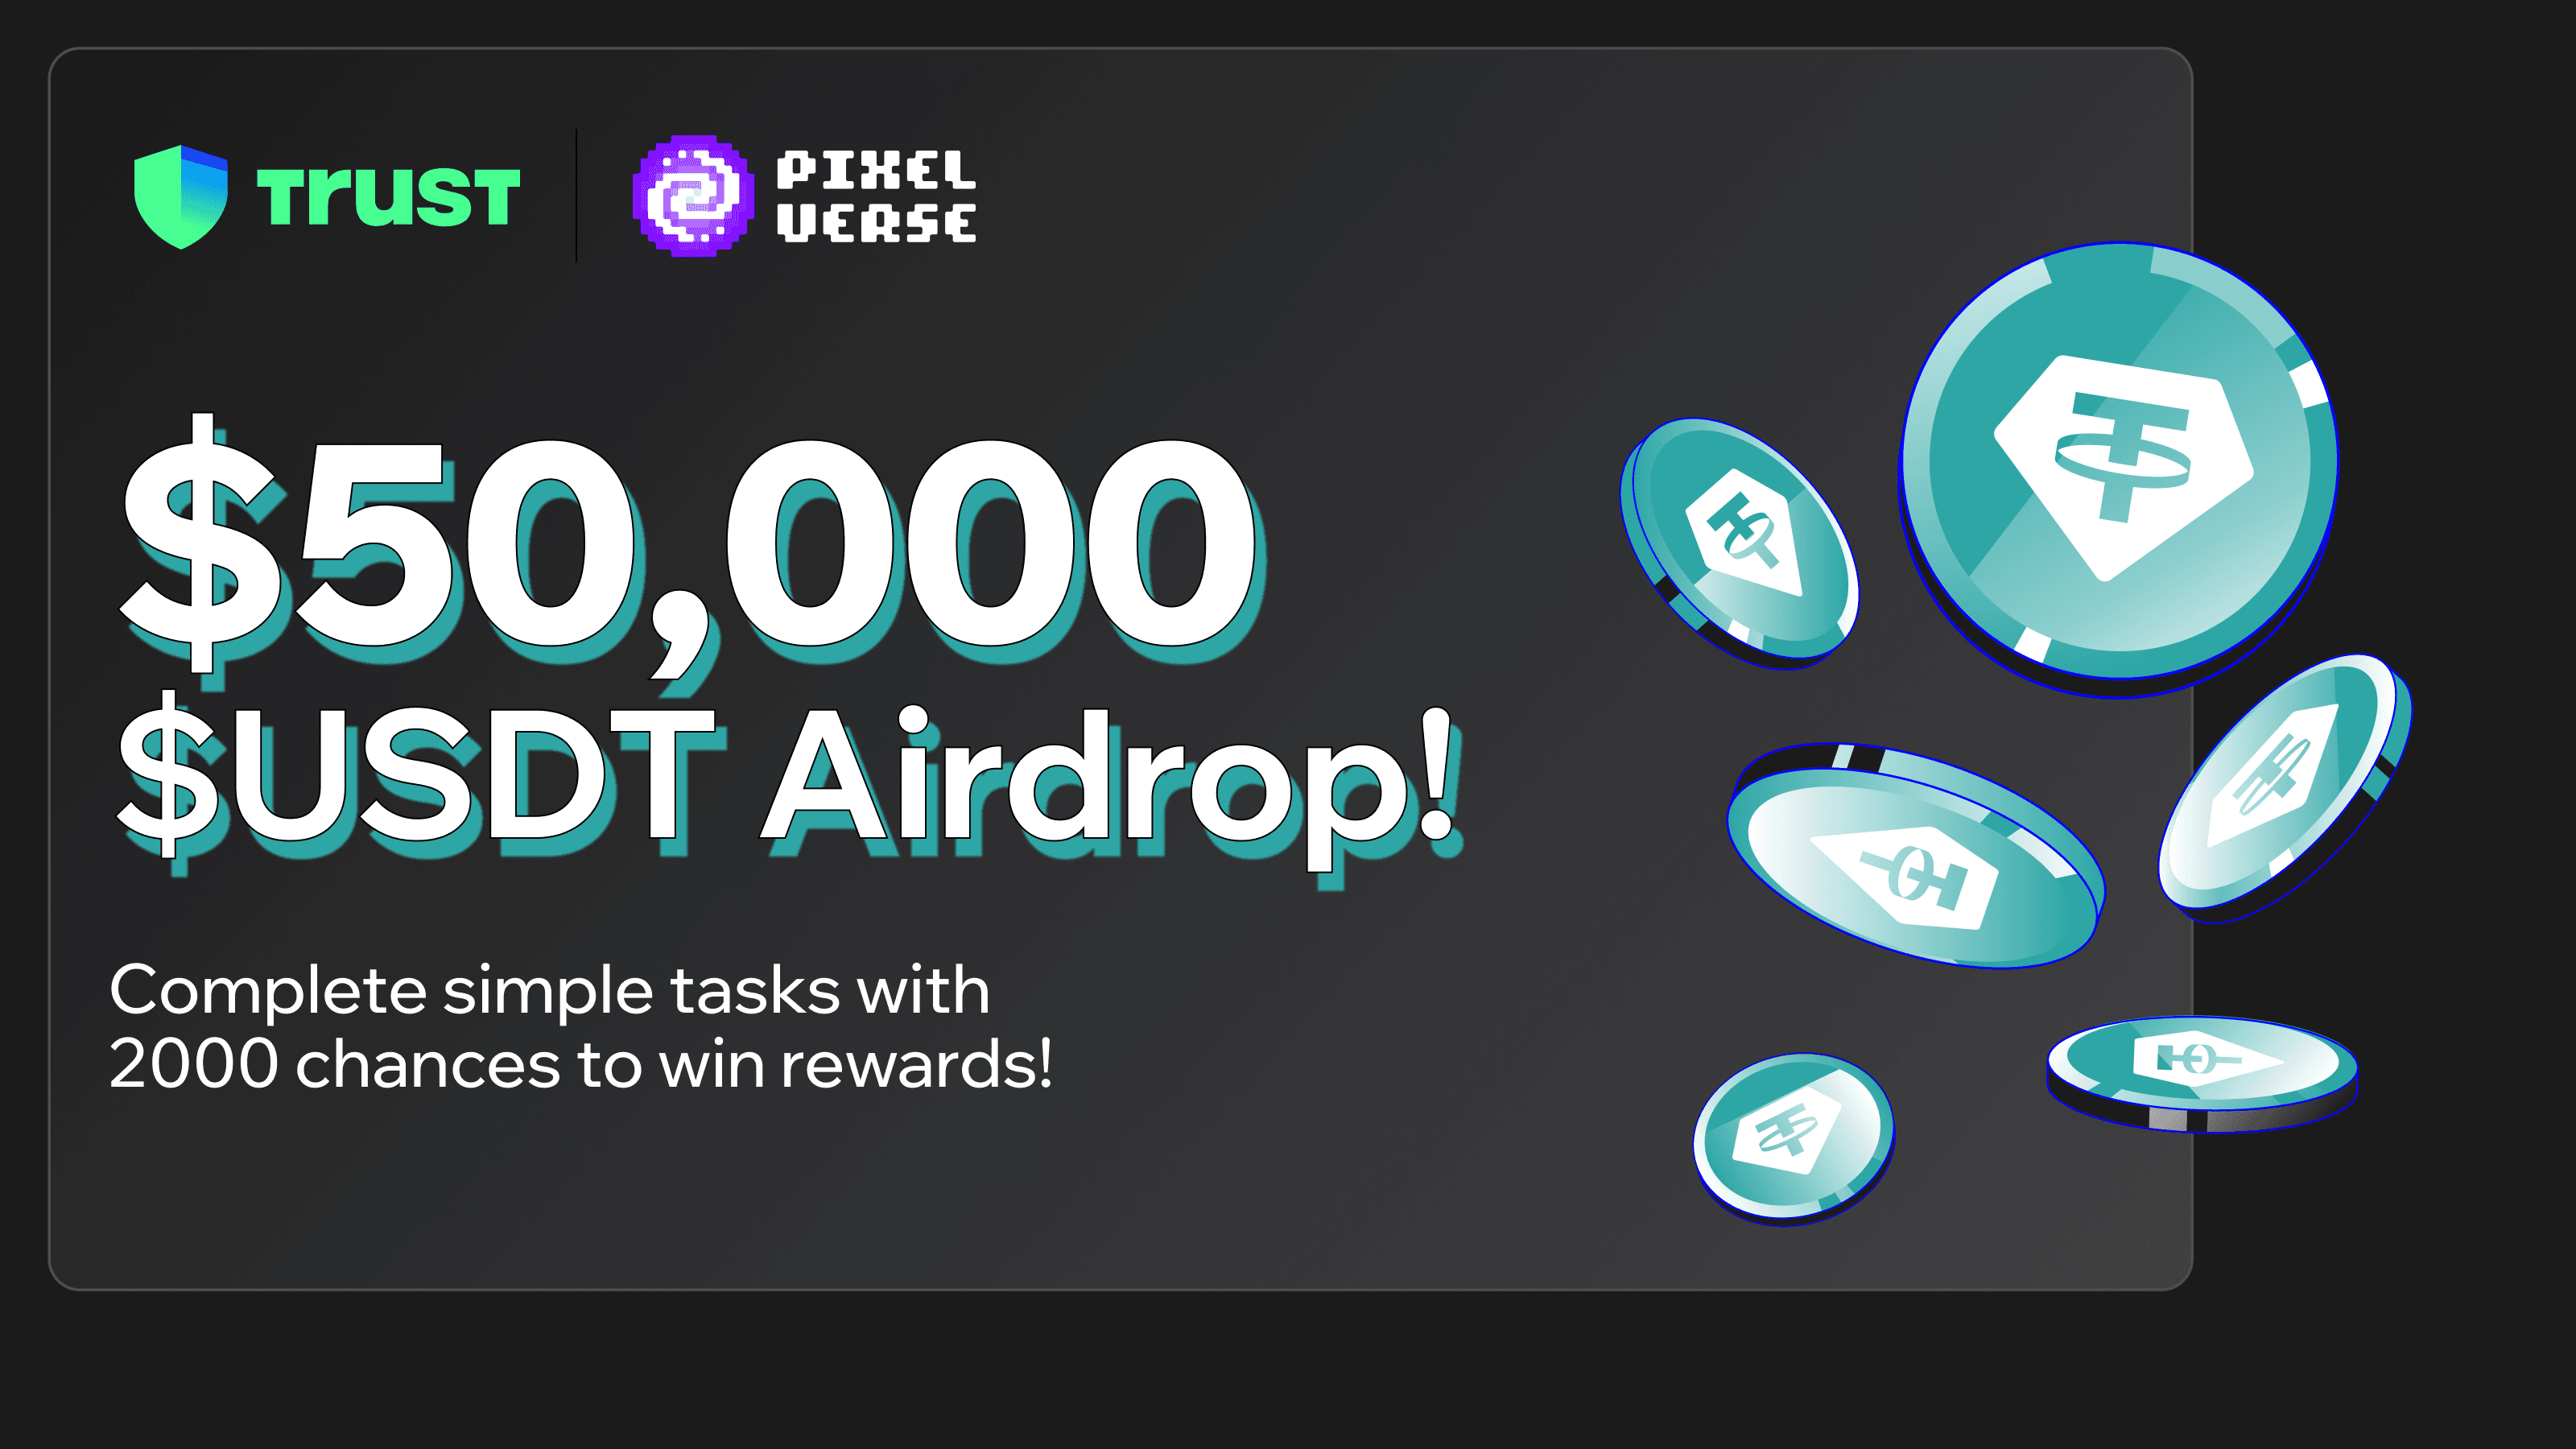 Trust Wallet x Pixelverse : $50,000 $USDT Airdrop with 2000 Chances to Win!